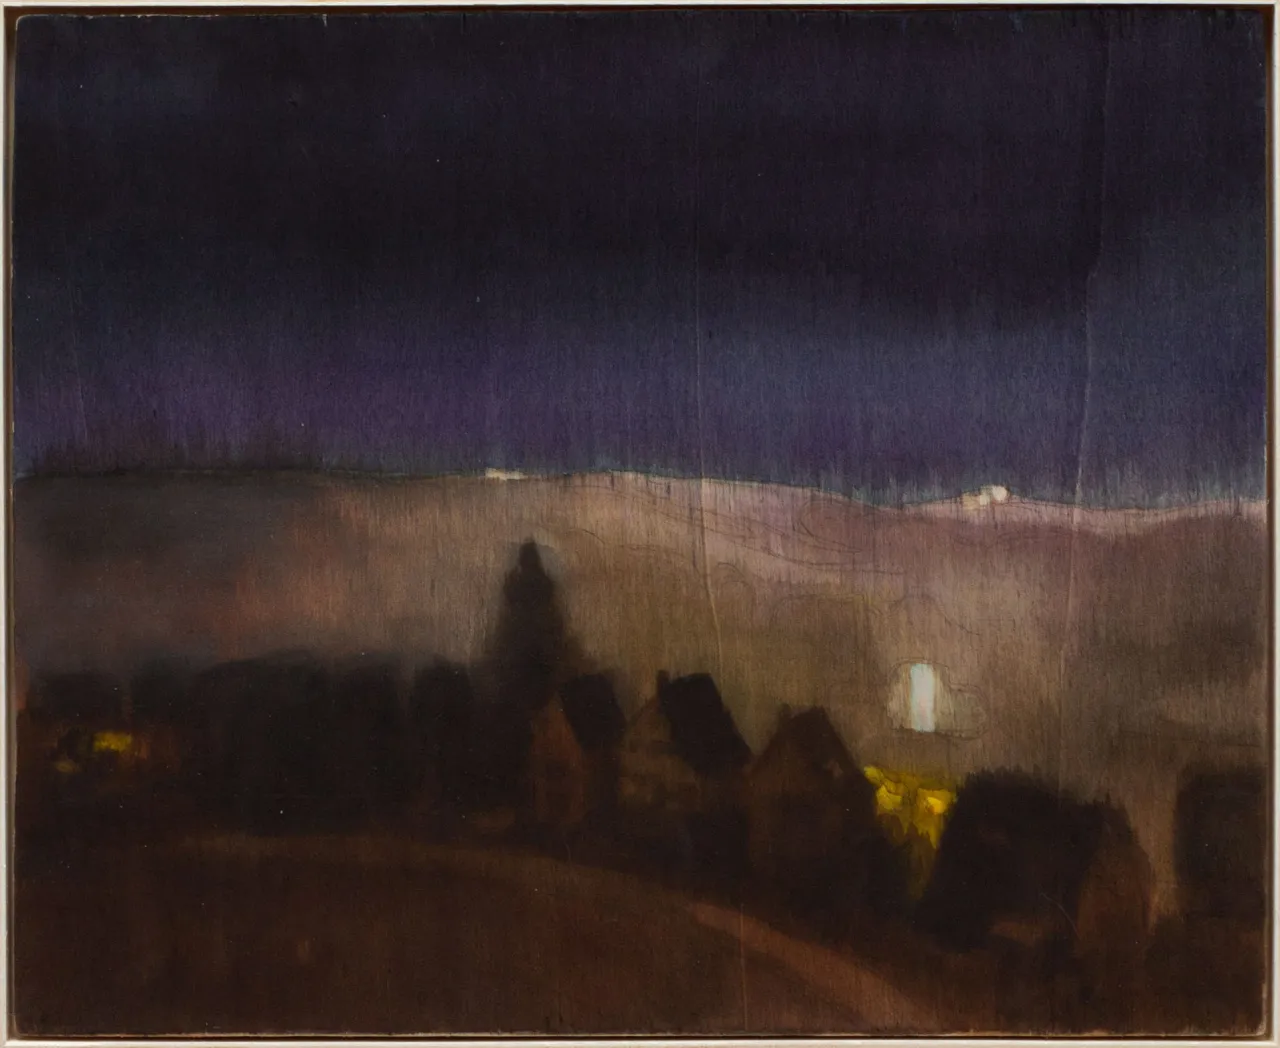 Arthur Metz, Stuttgarter Nacht, 2020, Acryl auf Holz, gerahmt, 30 x 37 cm (ungerahmt), Courtesy: Arthur Metz.